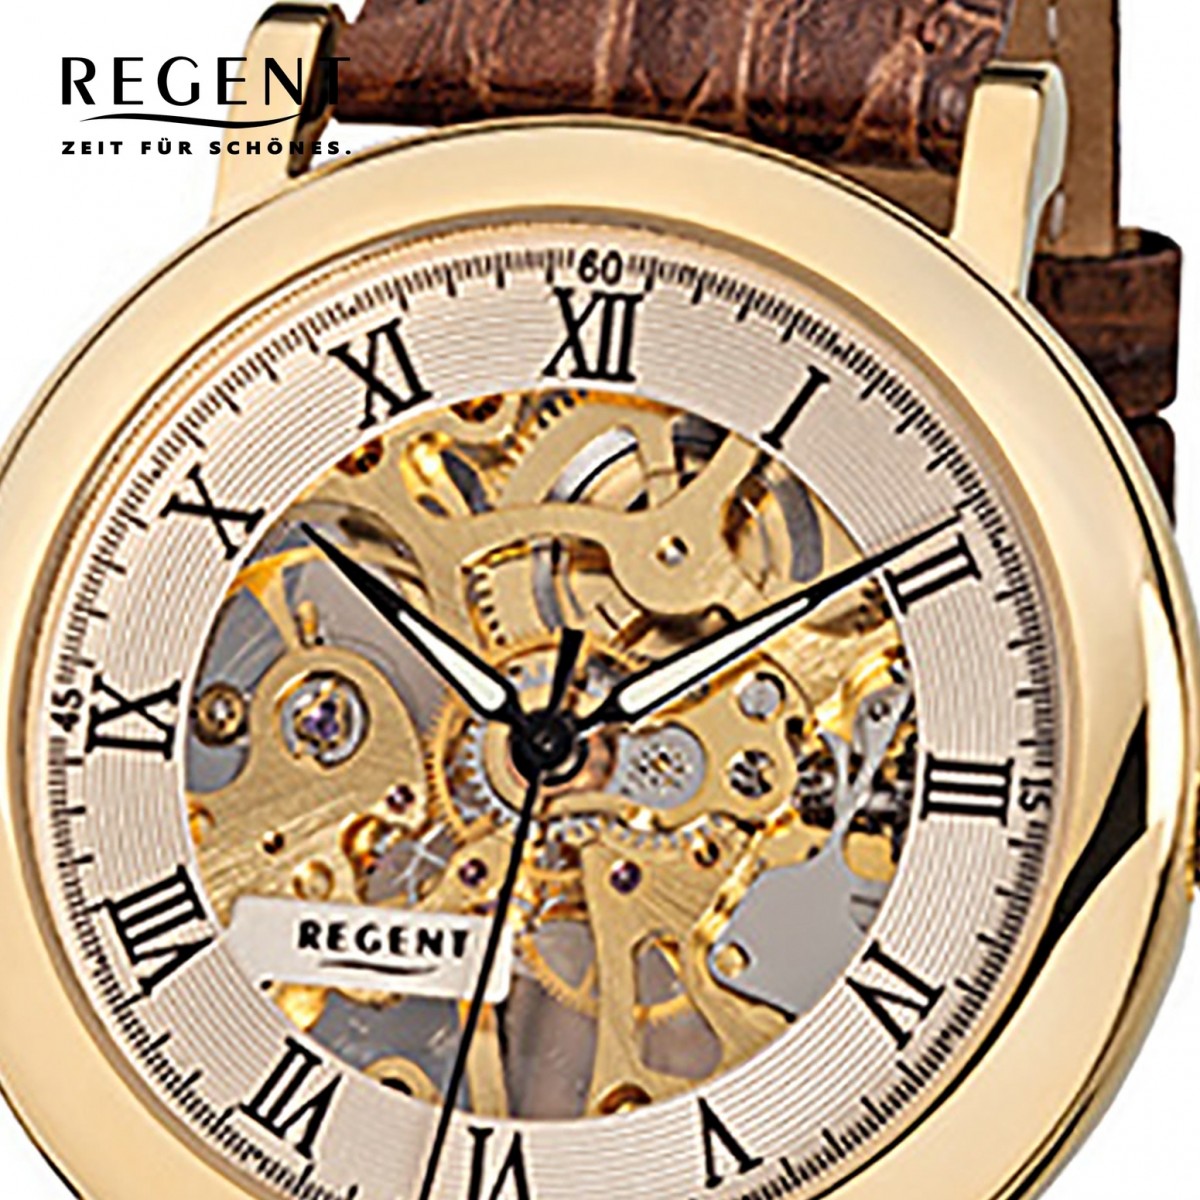 Regent Herren-Armbanduhr URF758 Mineralglas F-1390 Leder braun Handaufzug mechanisch